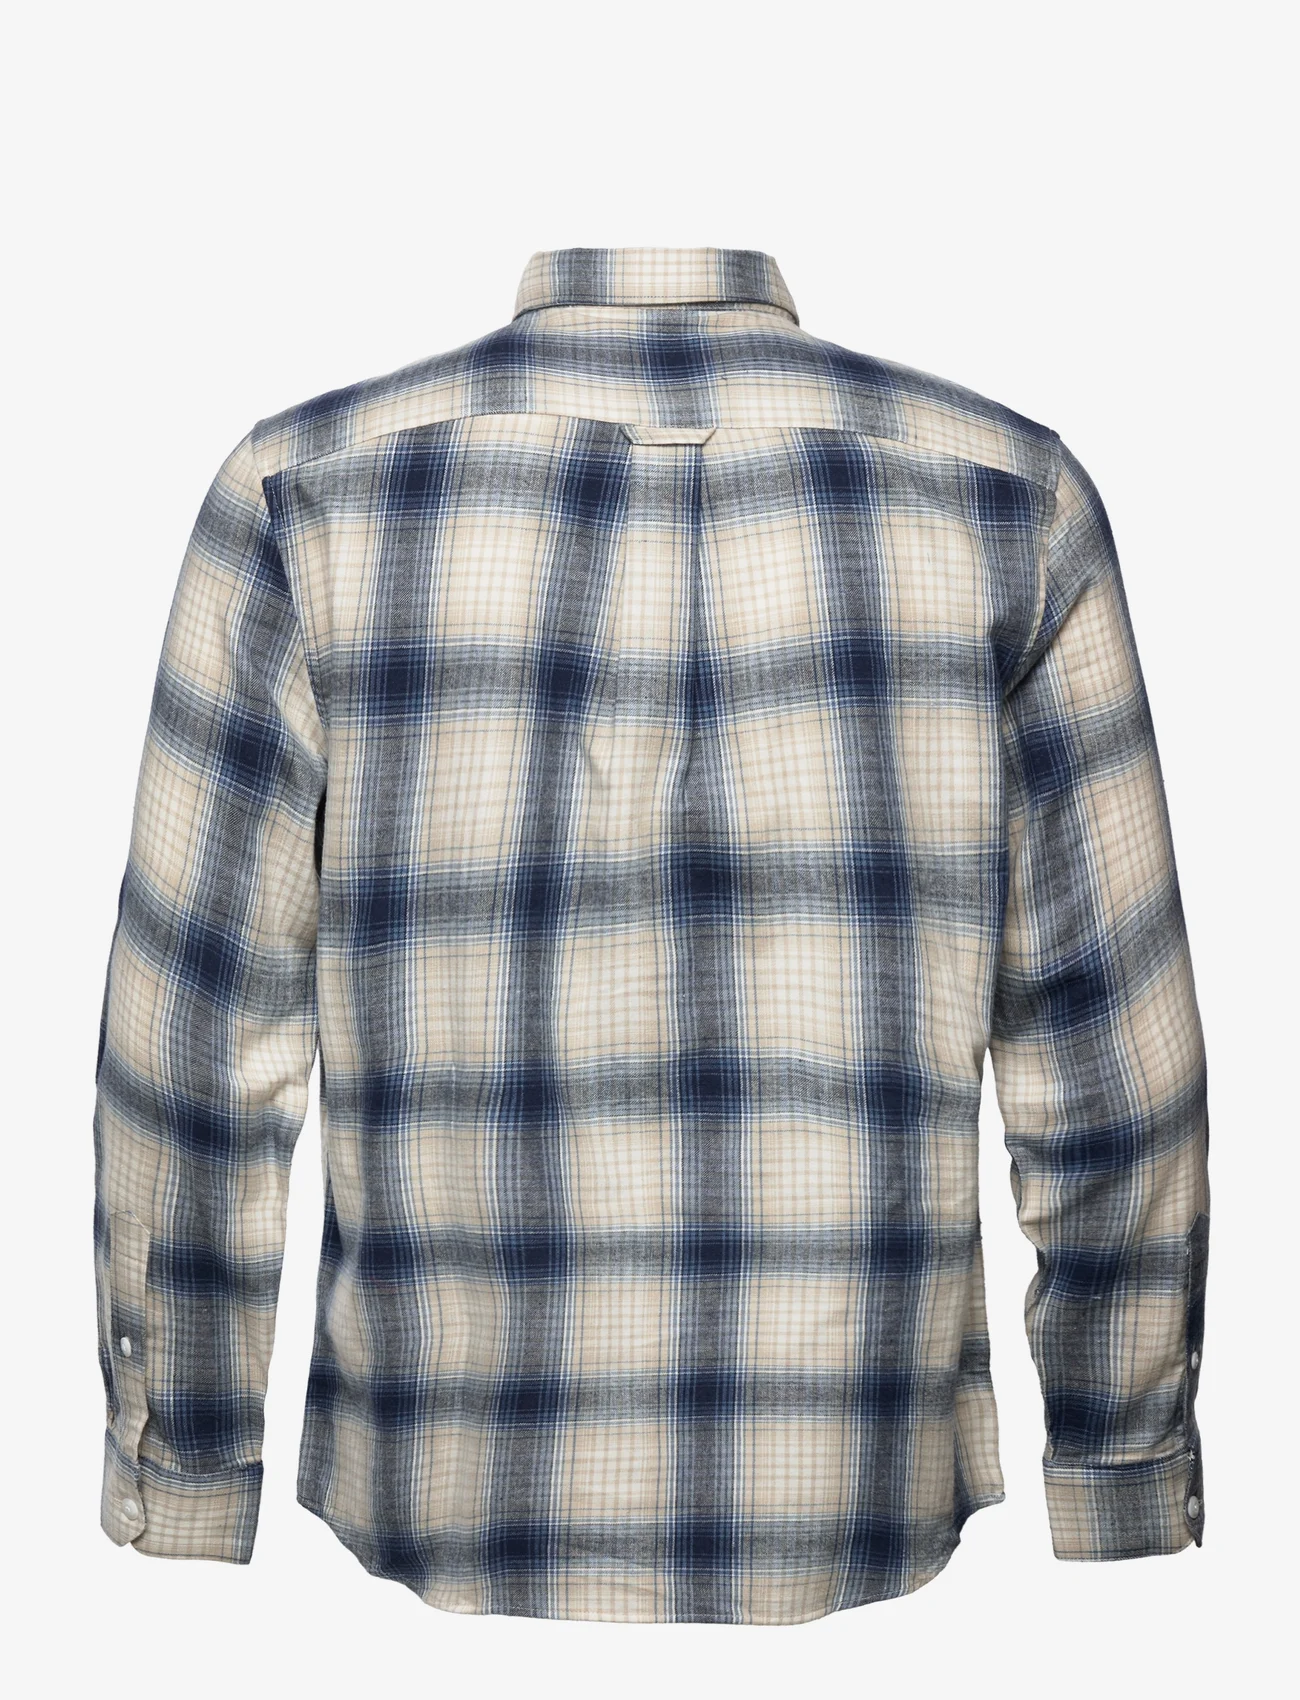 Farah - GREGORY LS CHECK - checkered shirts - cream - 1